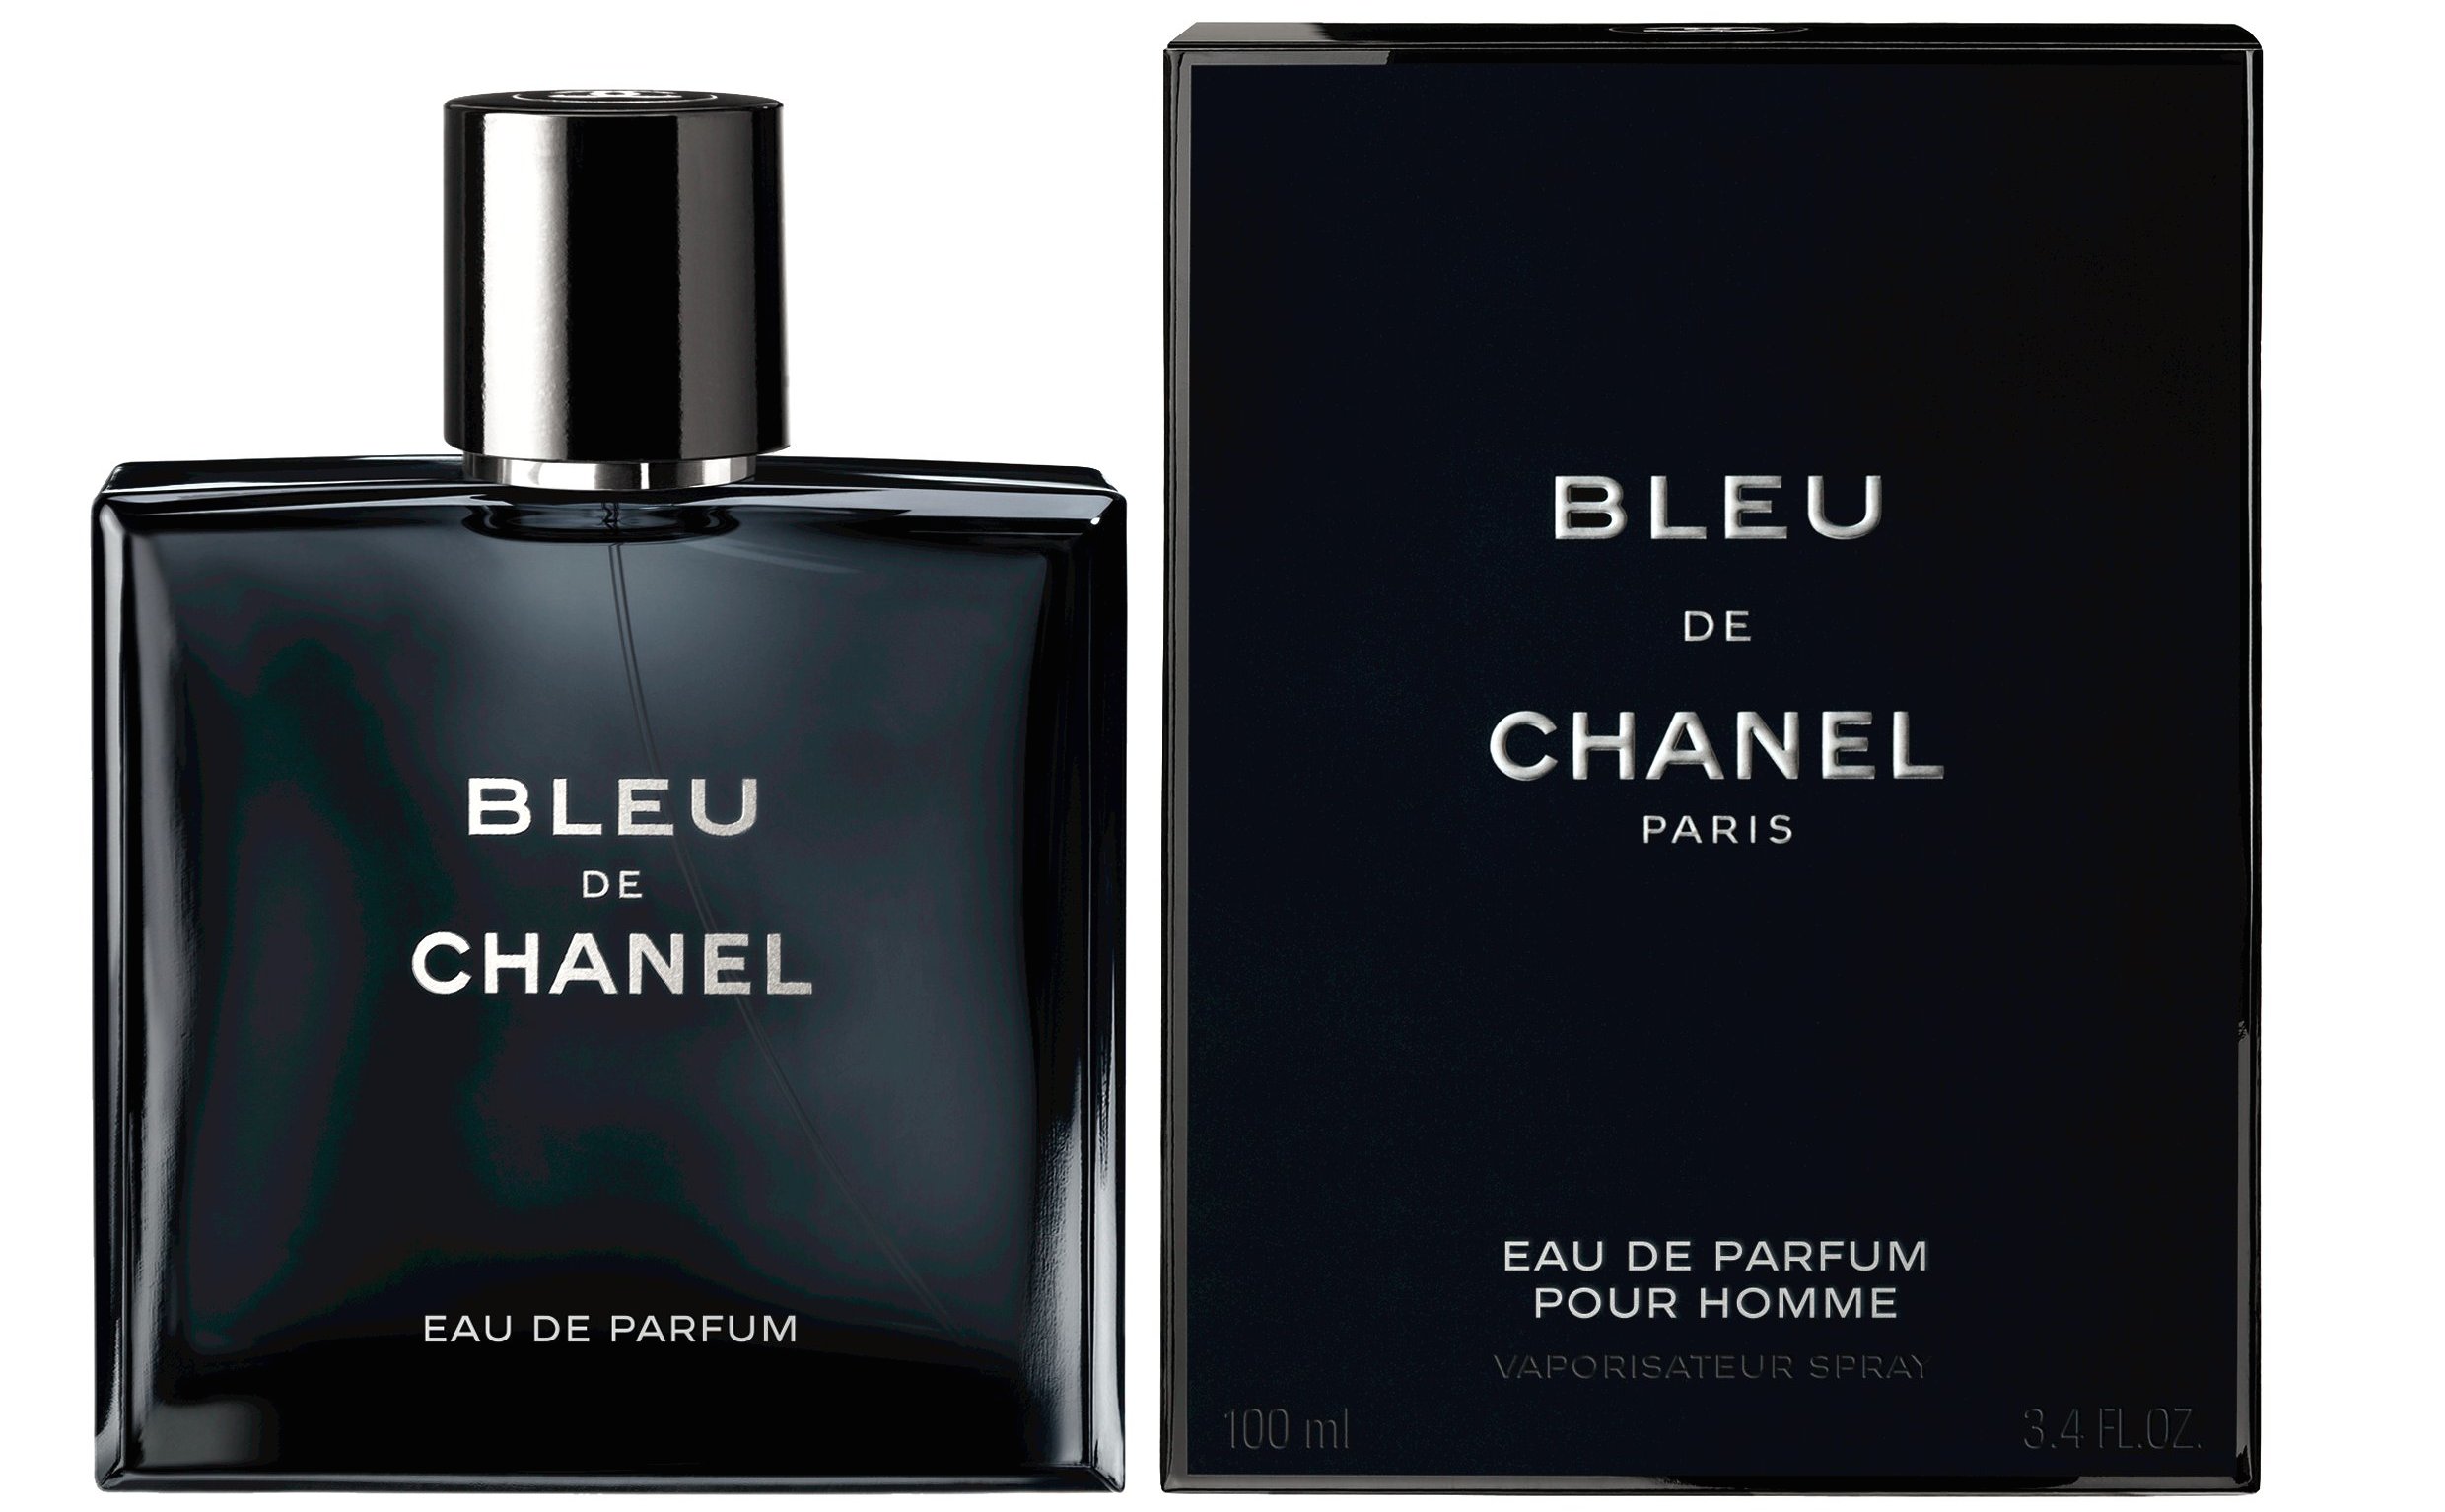 Mua Nước Hoa Nam Chanel Bleu De Chanel Parfum 100ml  Chanel  Mua tại Vua  Hàng Hiệu h023436